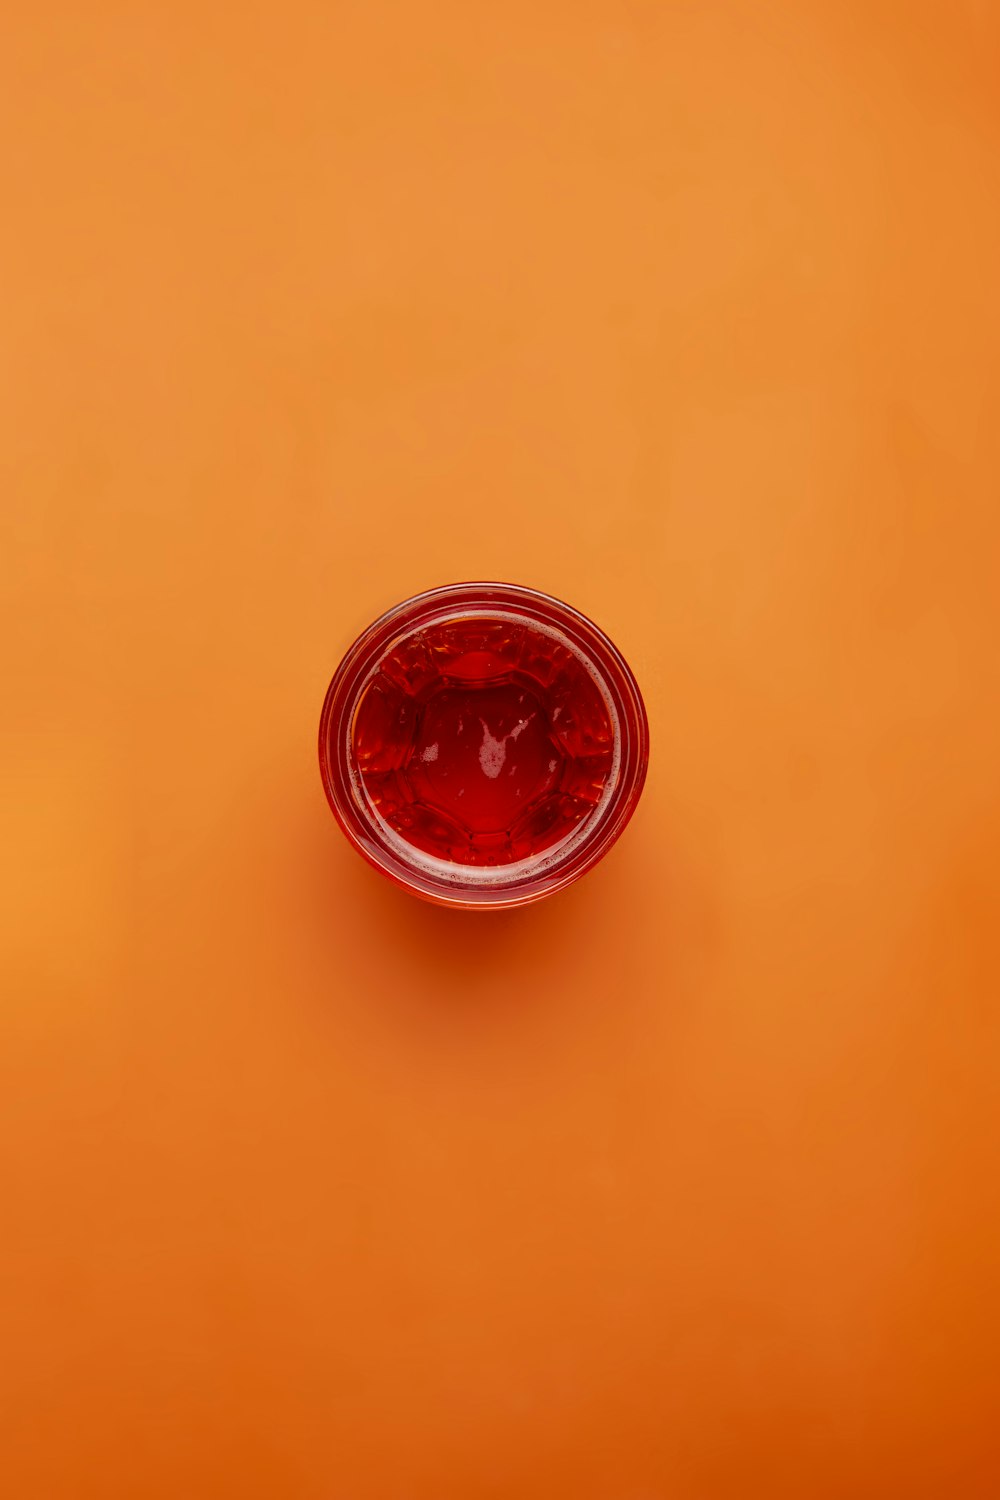 red round glass on orange surface